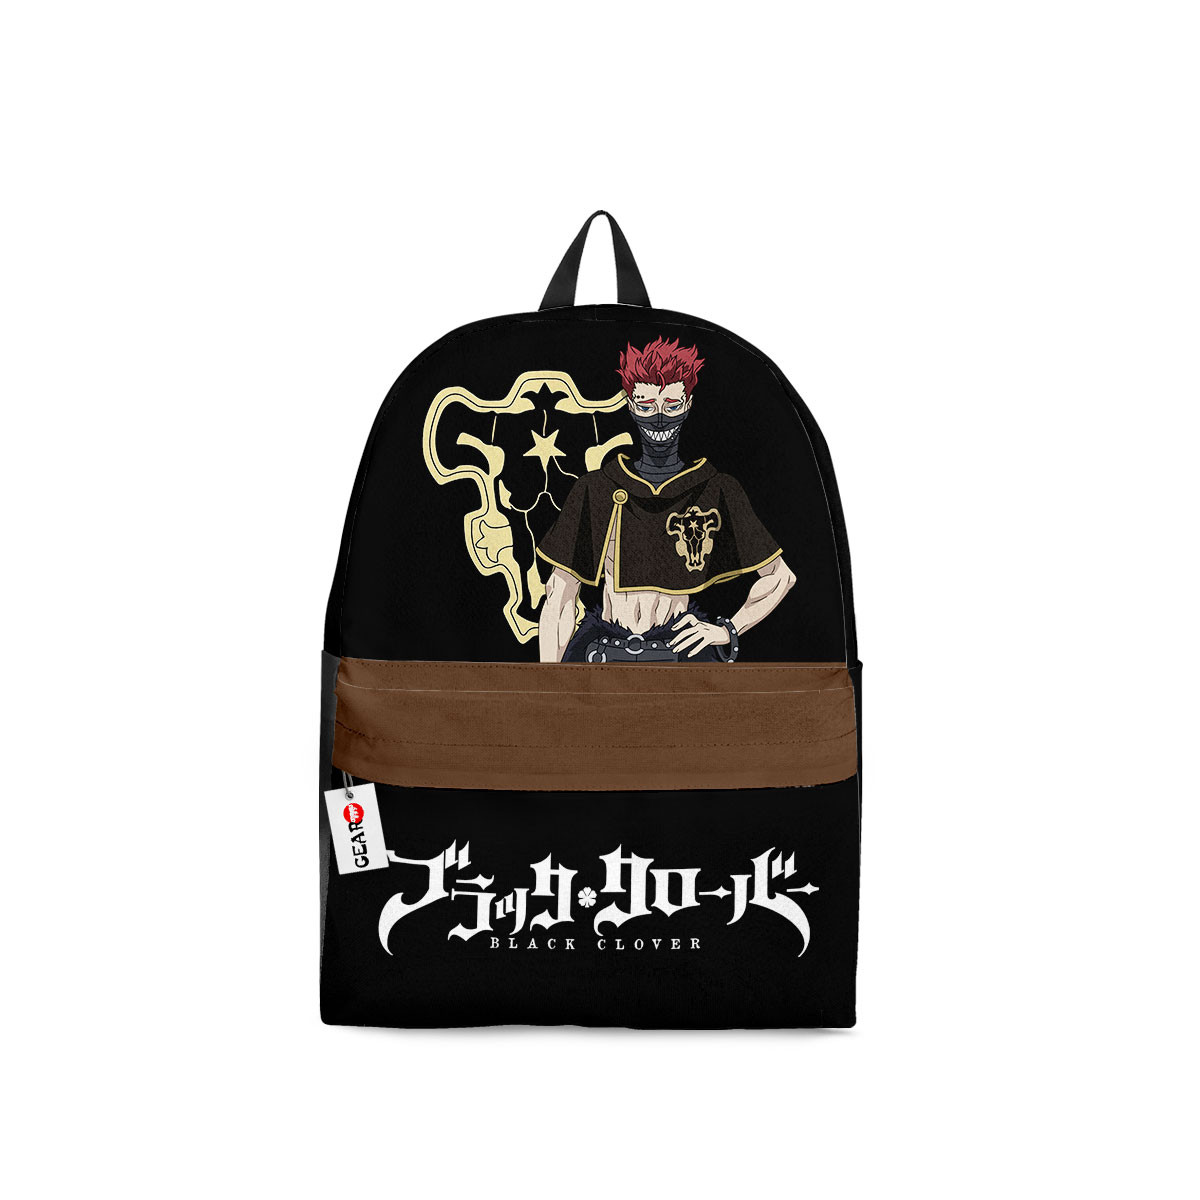 BEST Zora Ideale Black Clover Anime Backpack Bag1